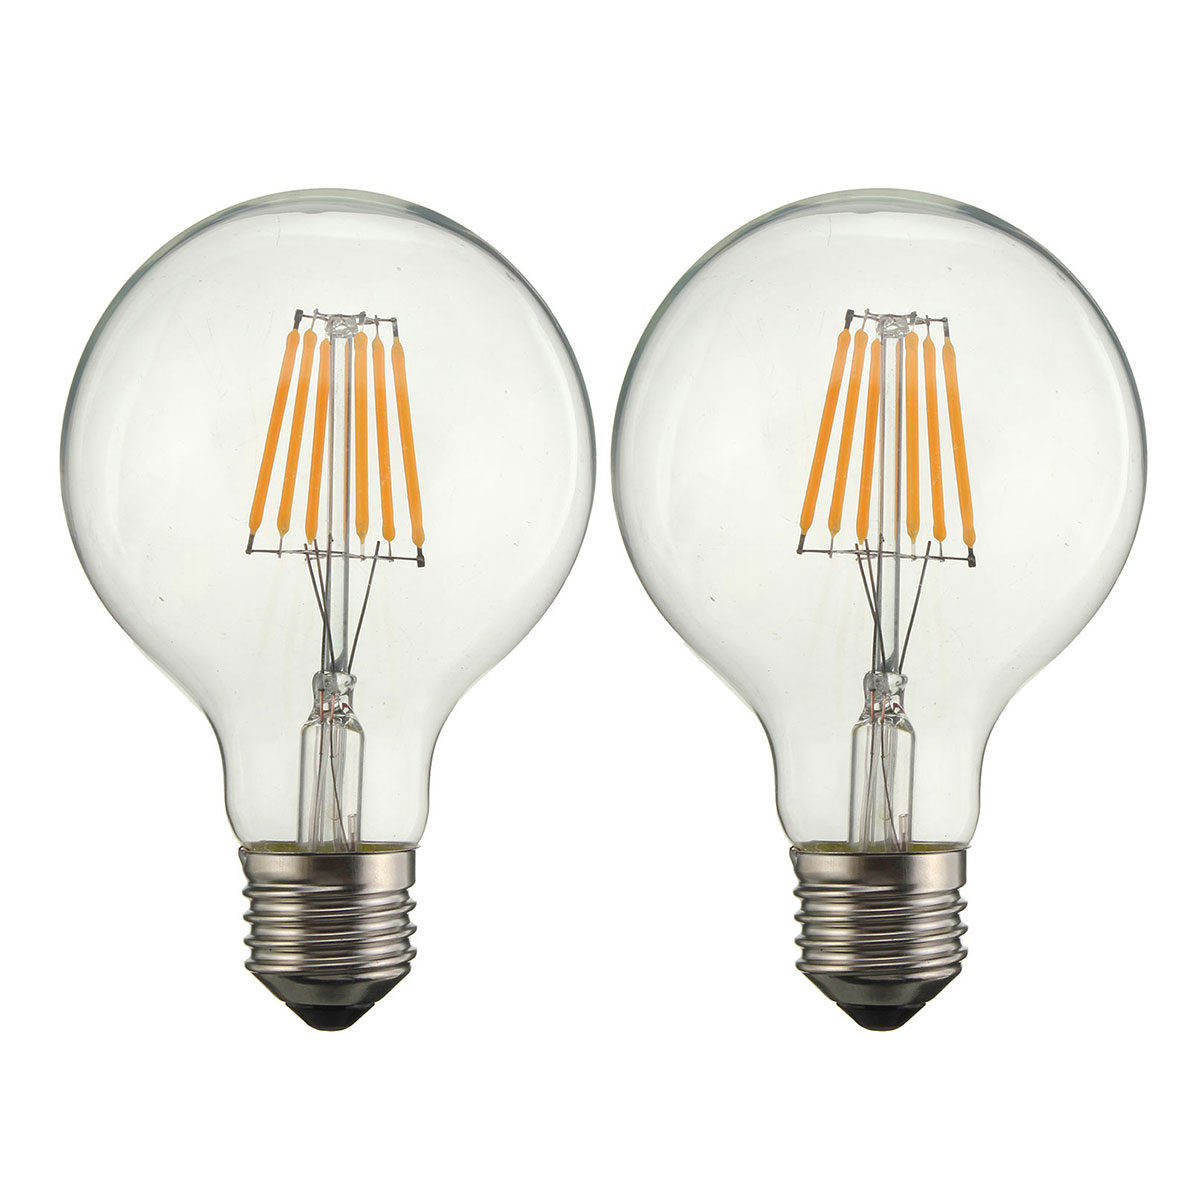 Dimmable-G80-E27-6W-COB-Warm-White-600Lumens-Retro-Vintage-Light-Lamp-Bulb-AC110V-AC220V-1074483-4